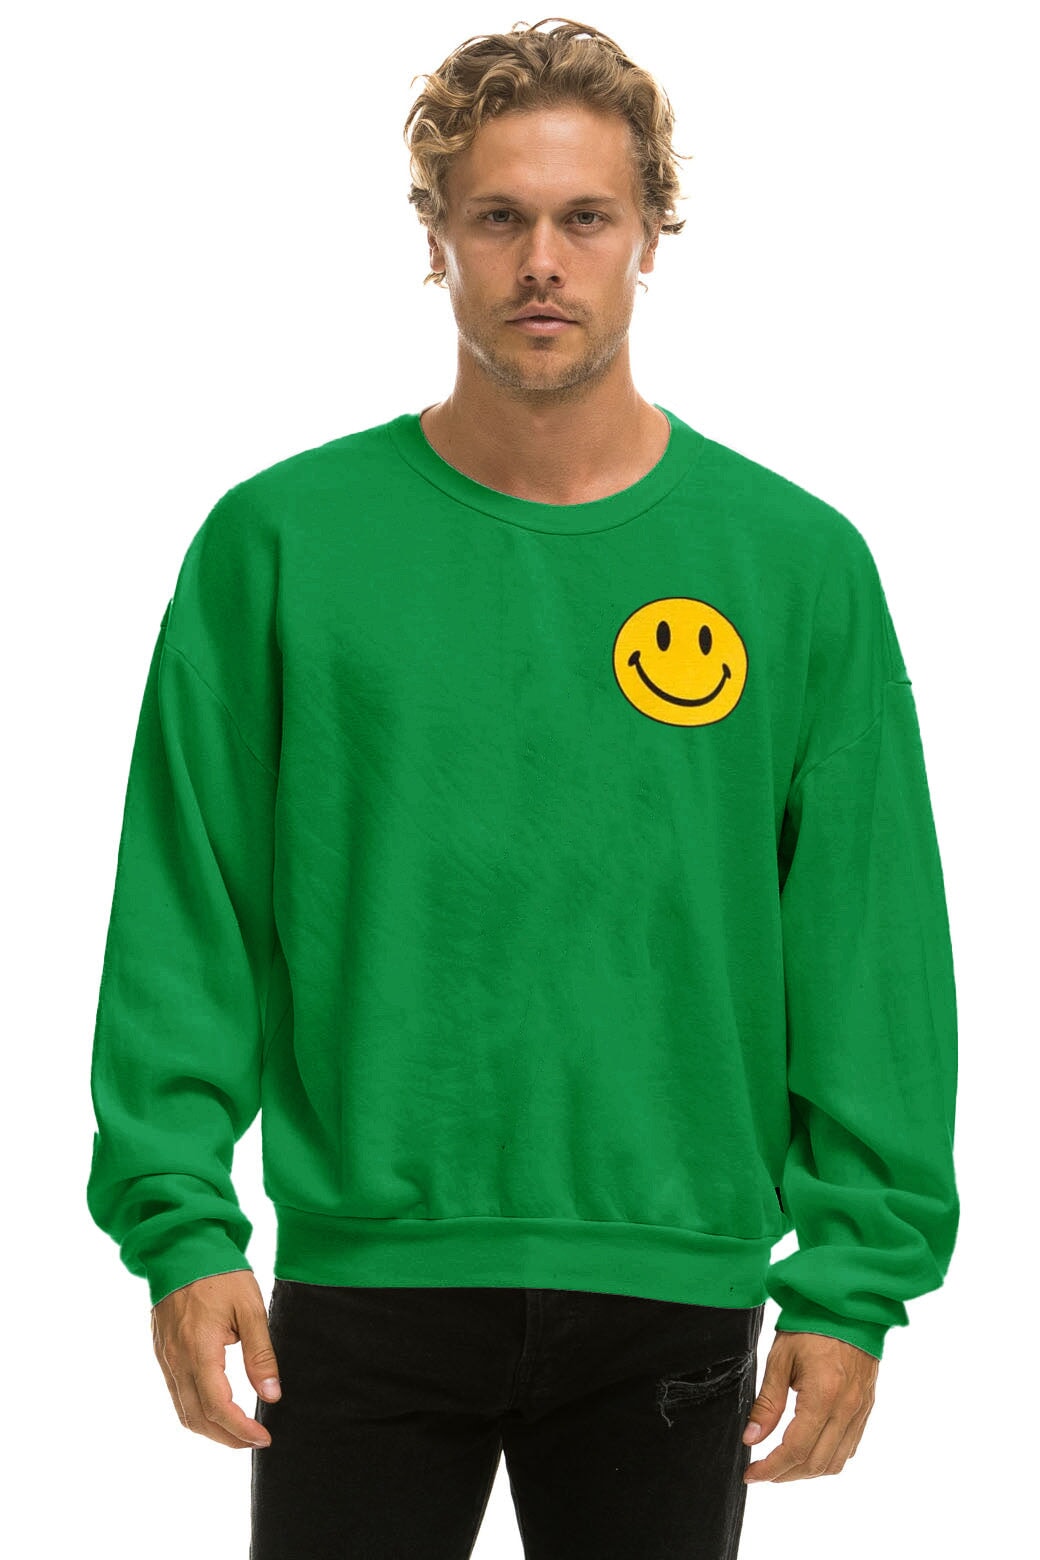 SMILEY 2 RELAXED LIGHT WEIGHT CREW SWEATSHIRT - KELLY GREEN Sweatshirt Aviator Nation 